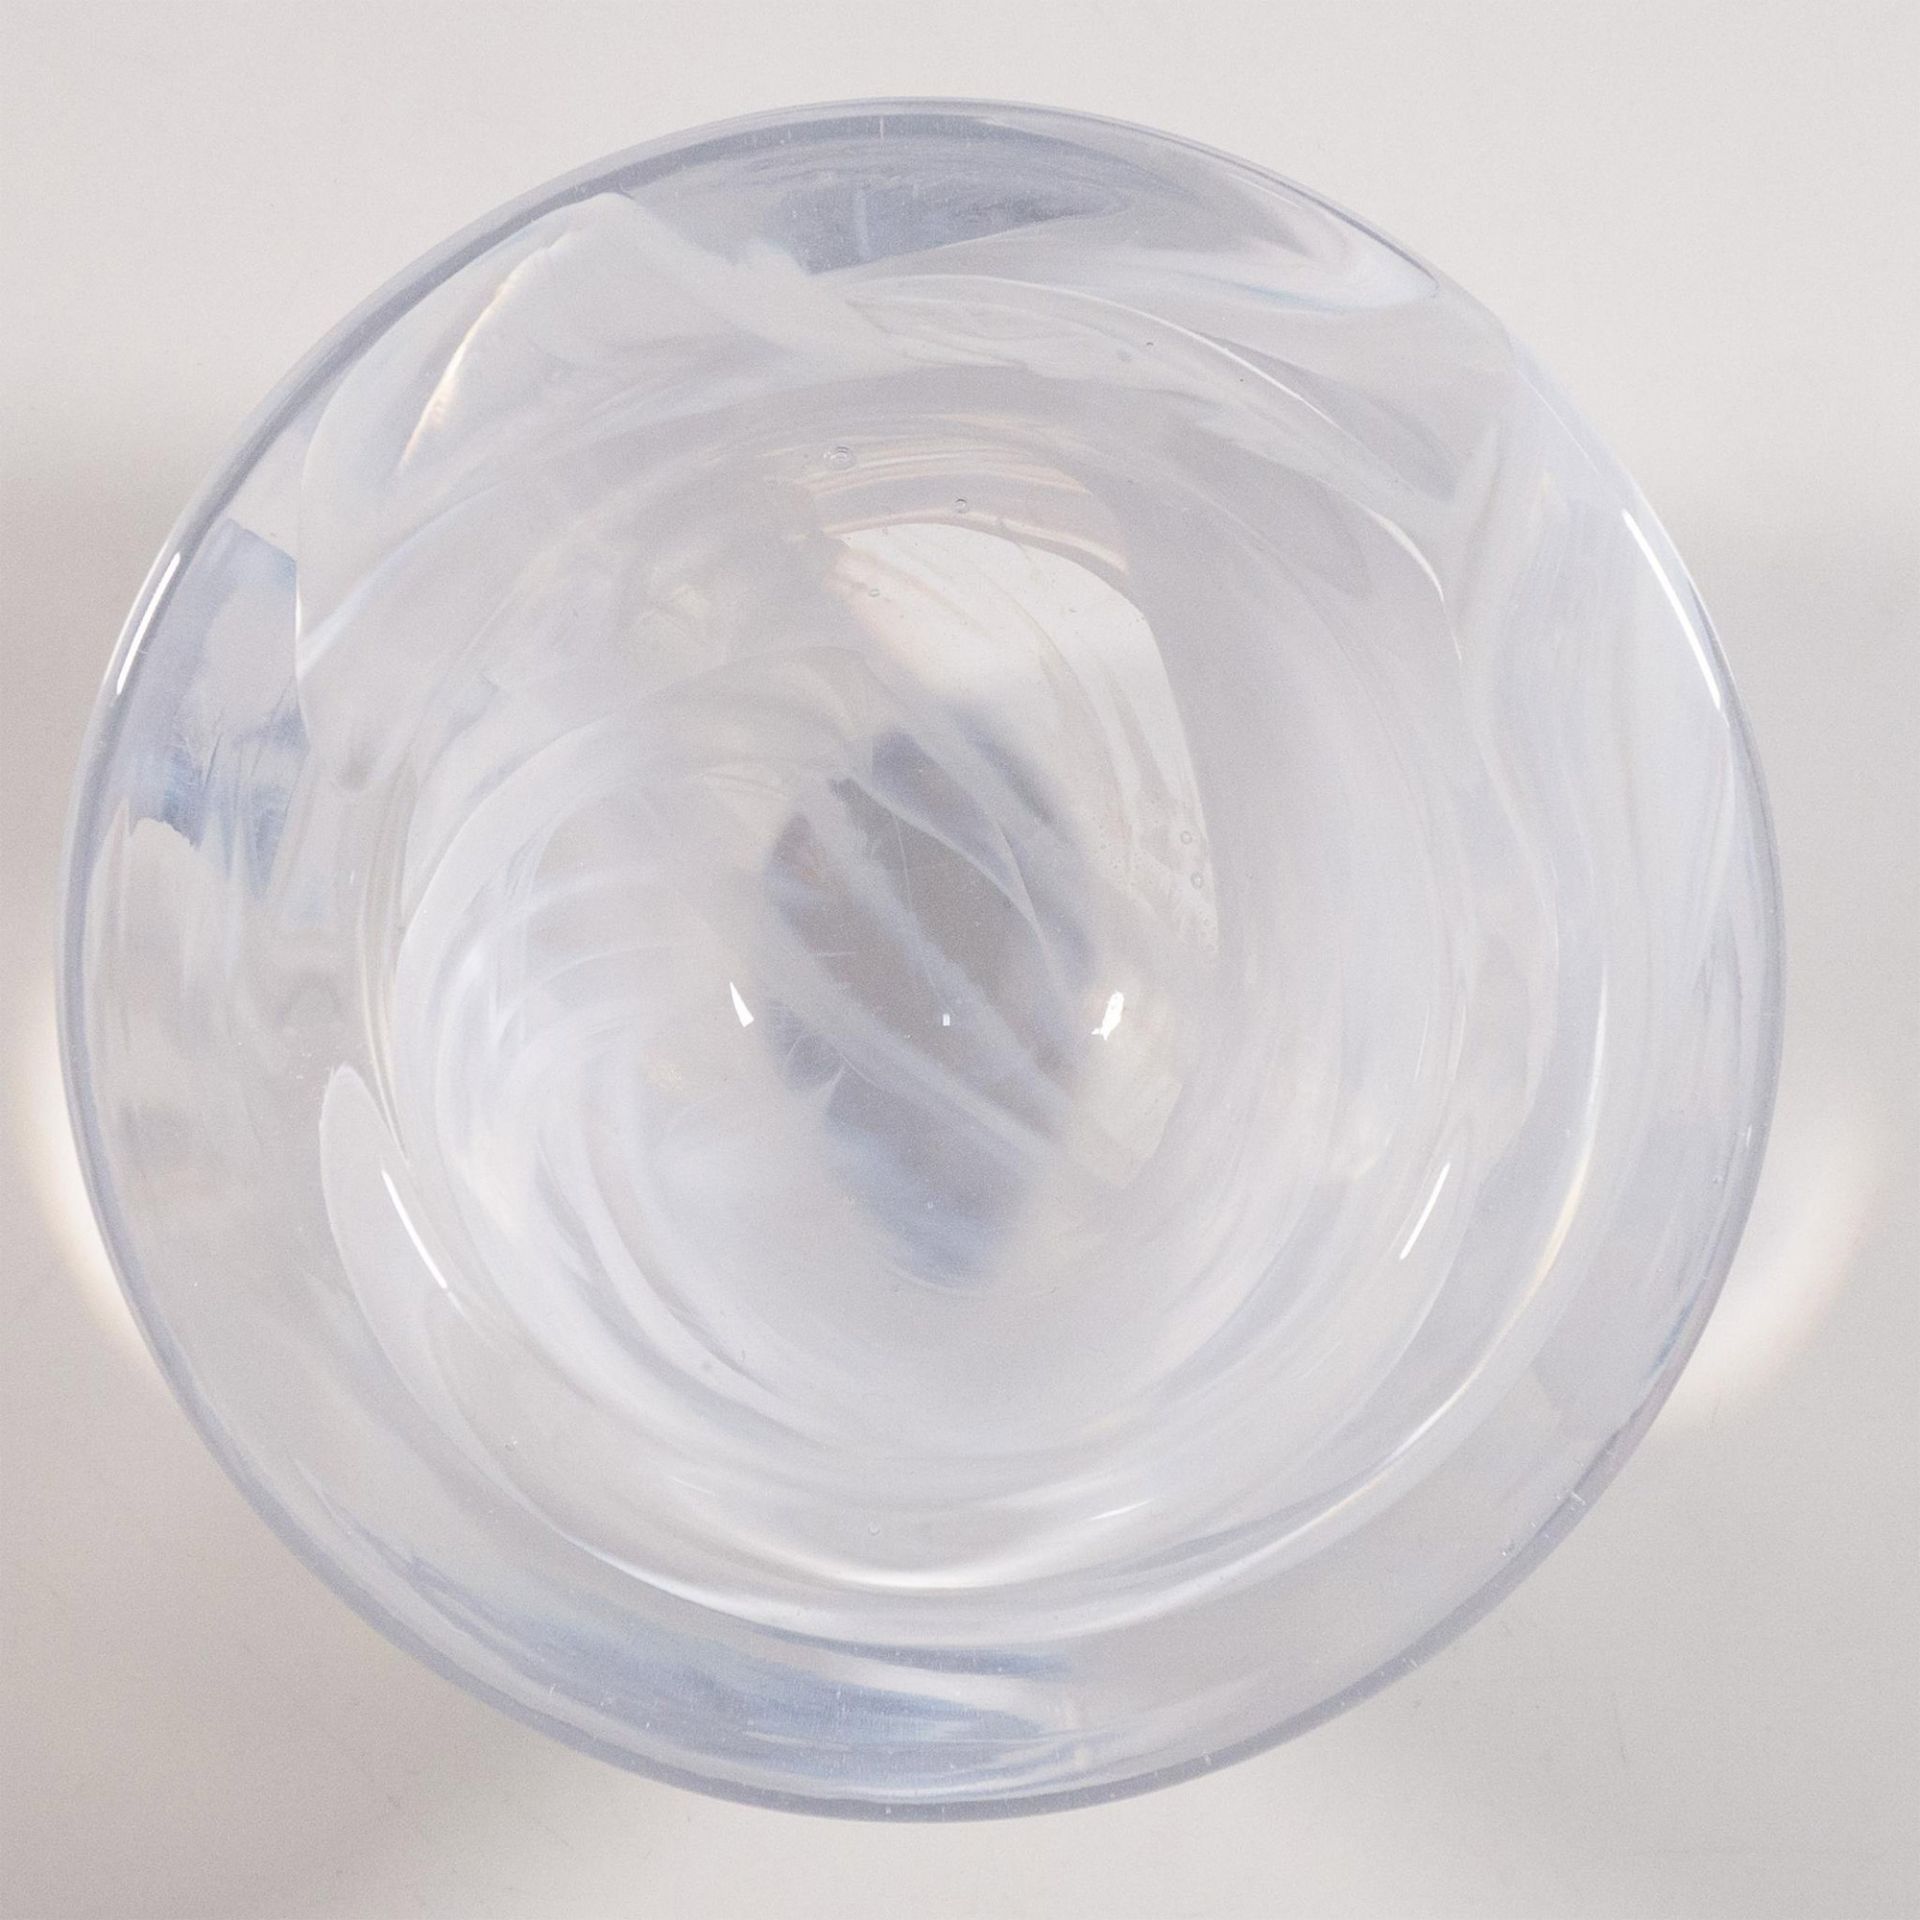 Kosta Boda by Anna Ehrner Round Glass Bowl, Atoll - Image 3 of 4